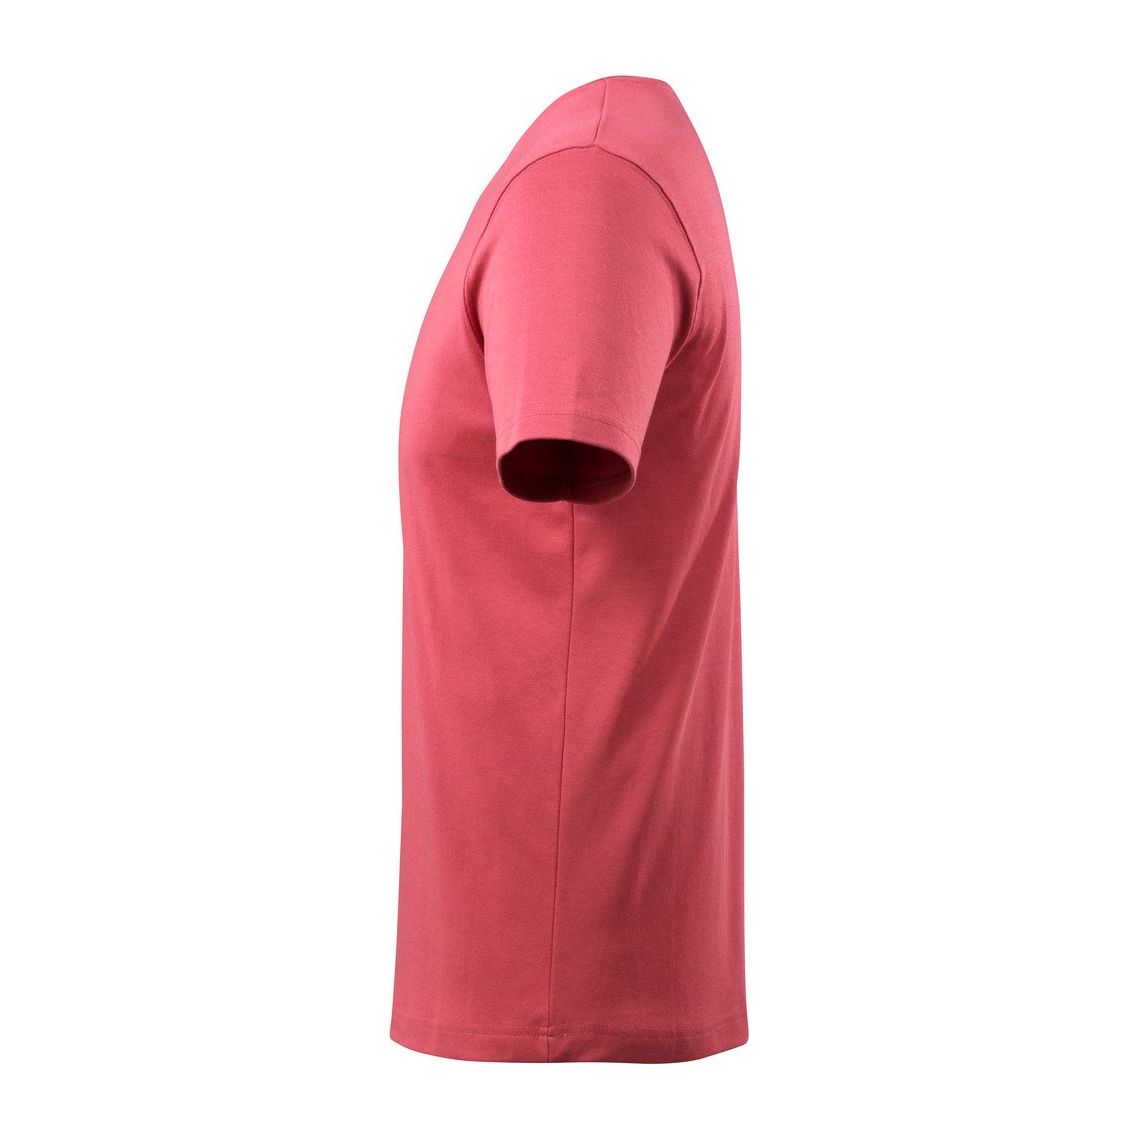 Mascot Vence T-shirt Slim-Fit Raspberry Red 51585-967-96 Side